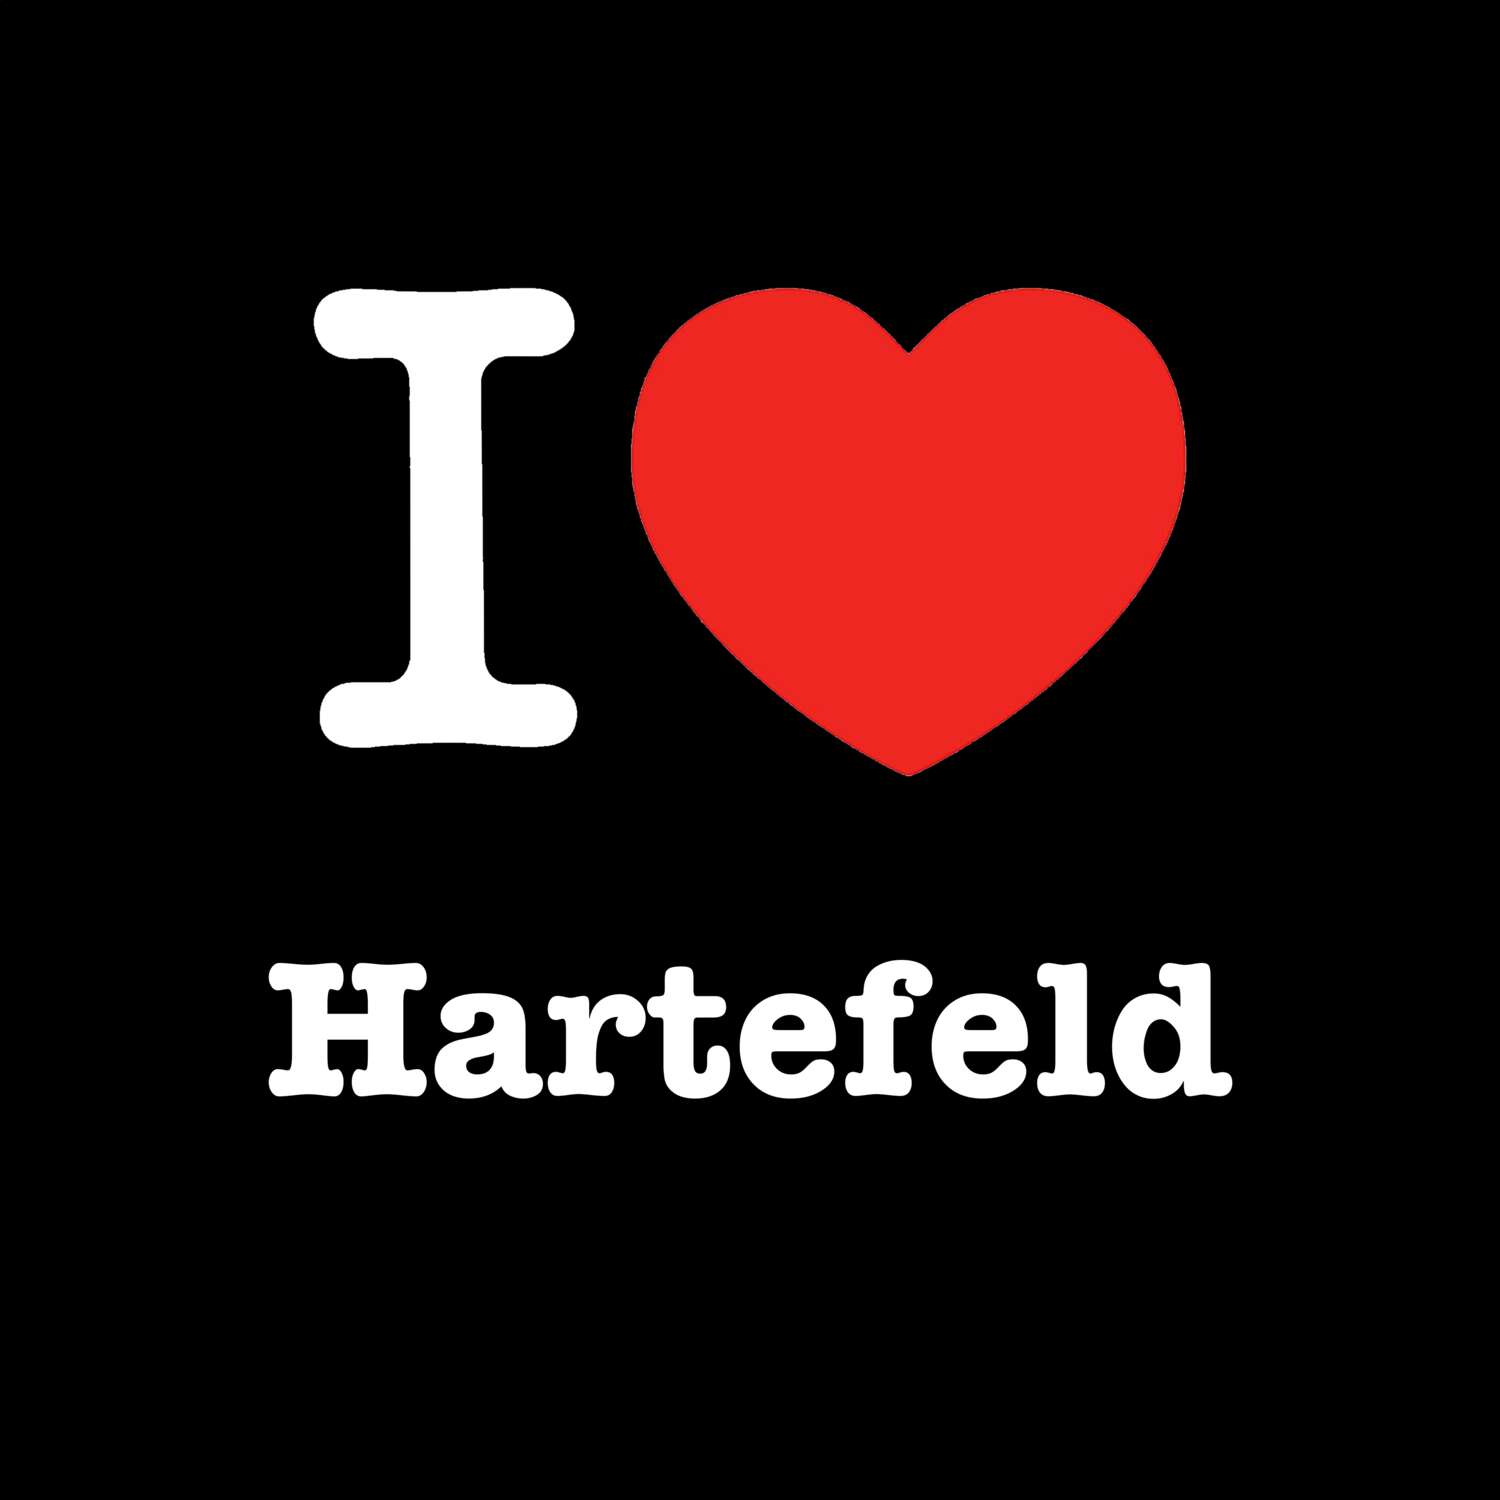 Hartefeld T-Shirt »I love«